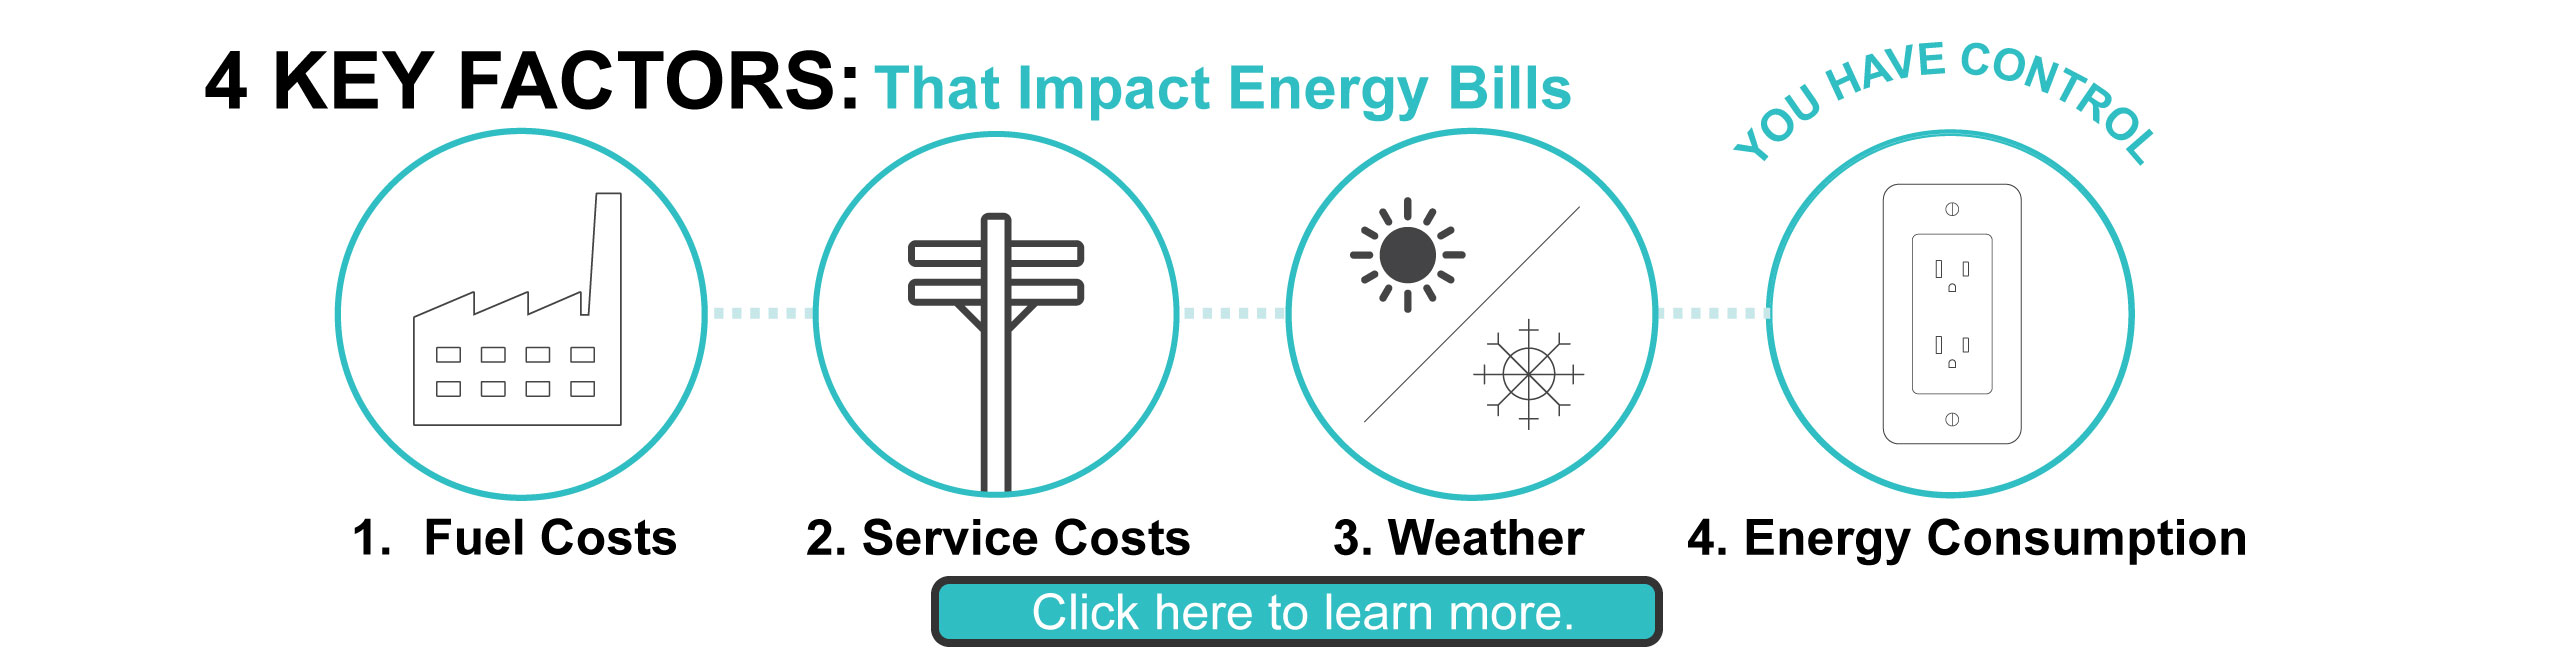 4 key factors impacting energy bills